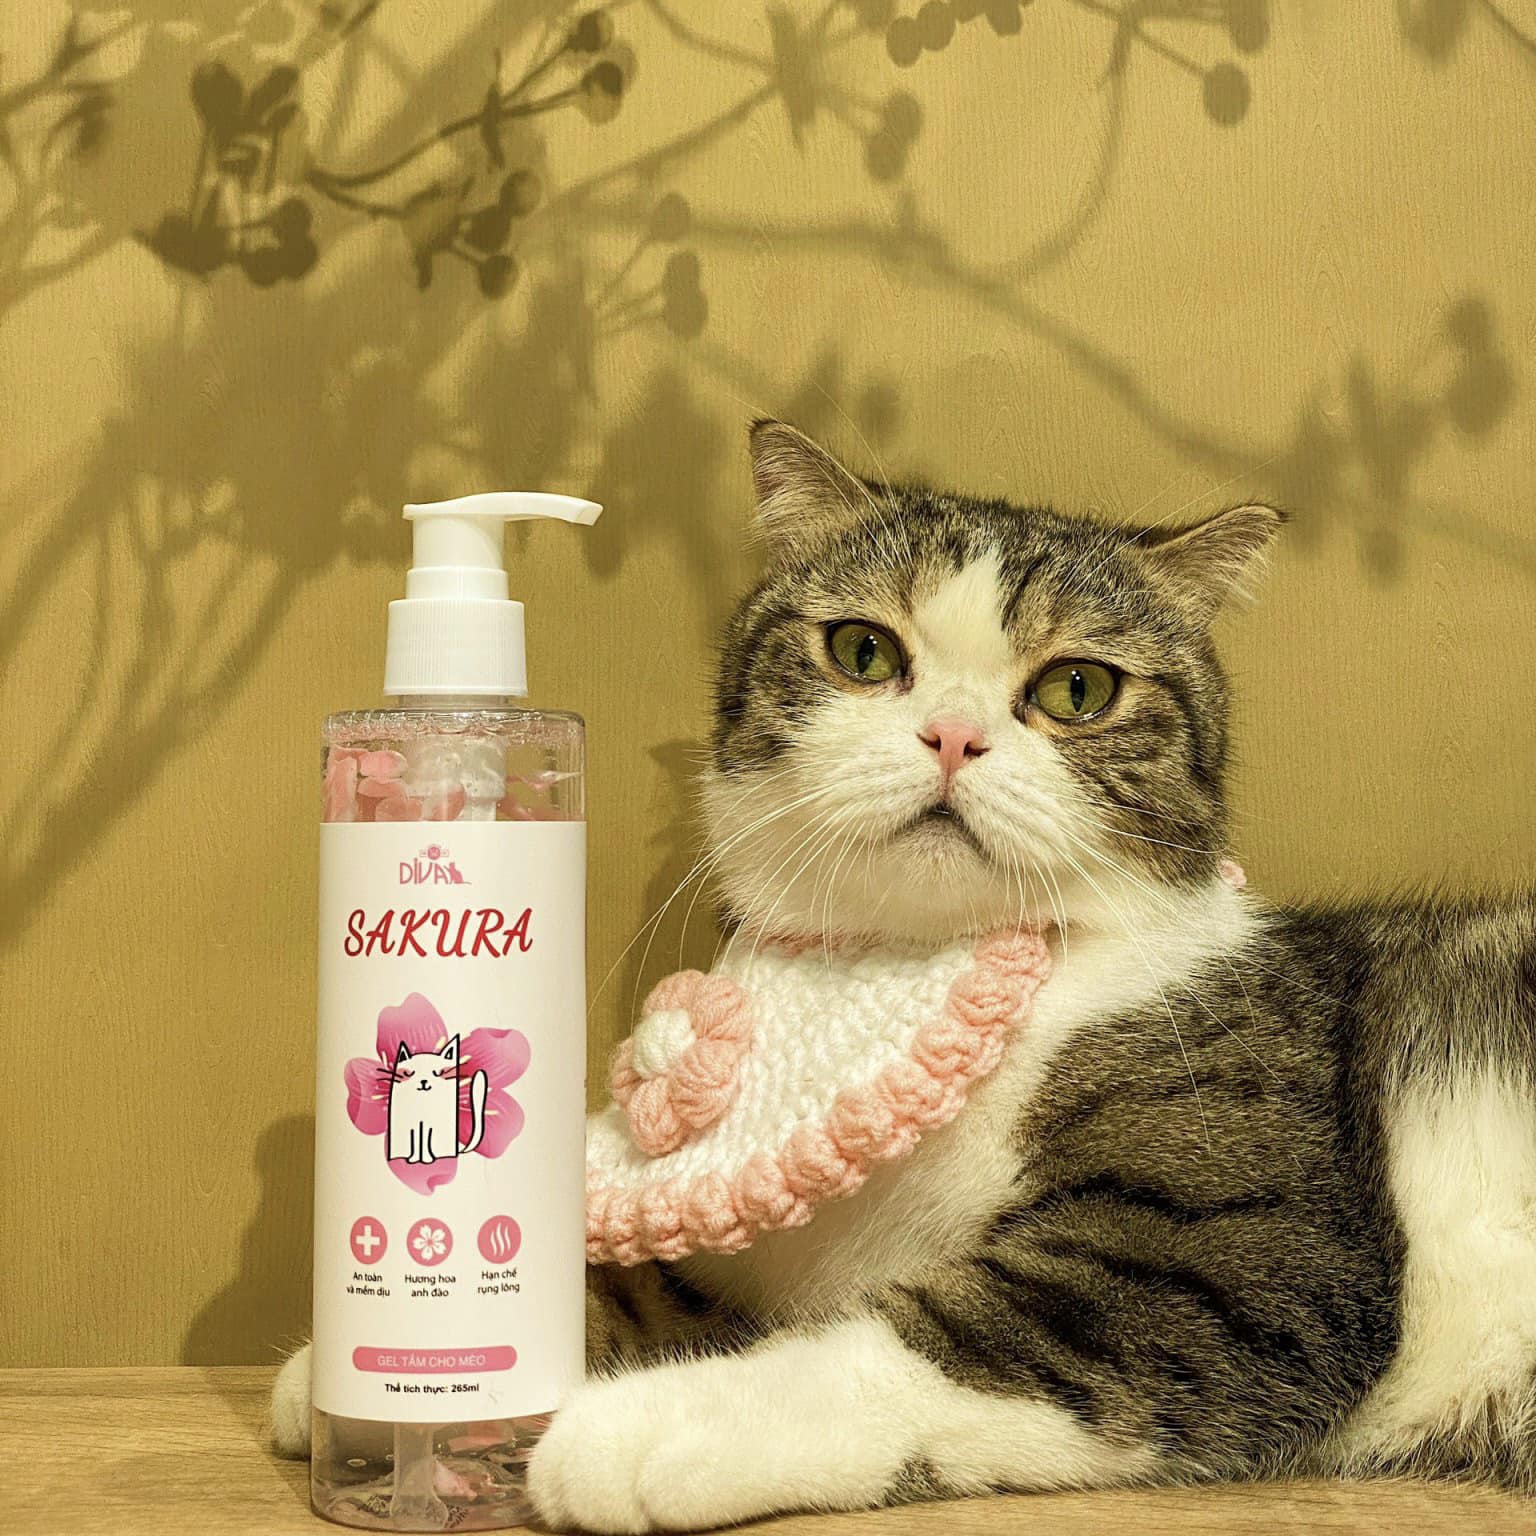 Gel Sữa Tắm Mèo Collagen Cao Cấp Anh Đào Diva Sakura - YonaPetshop